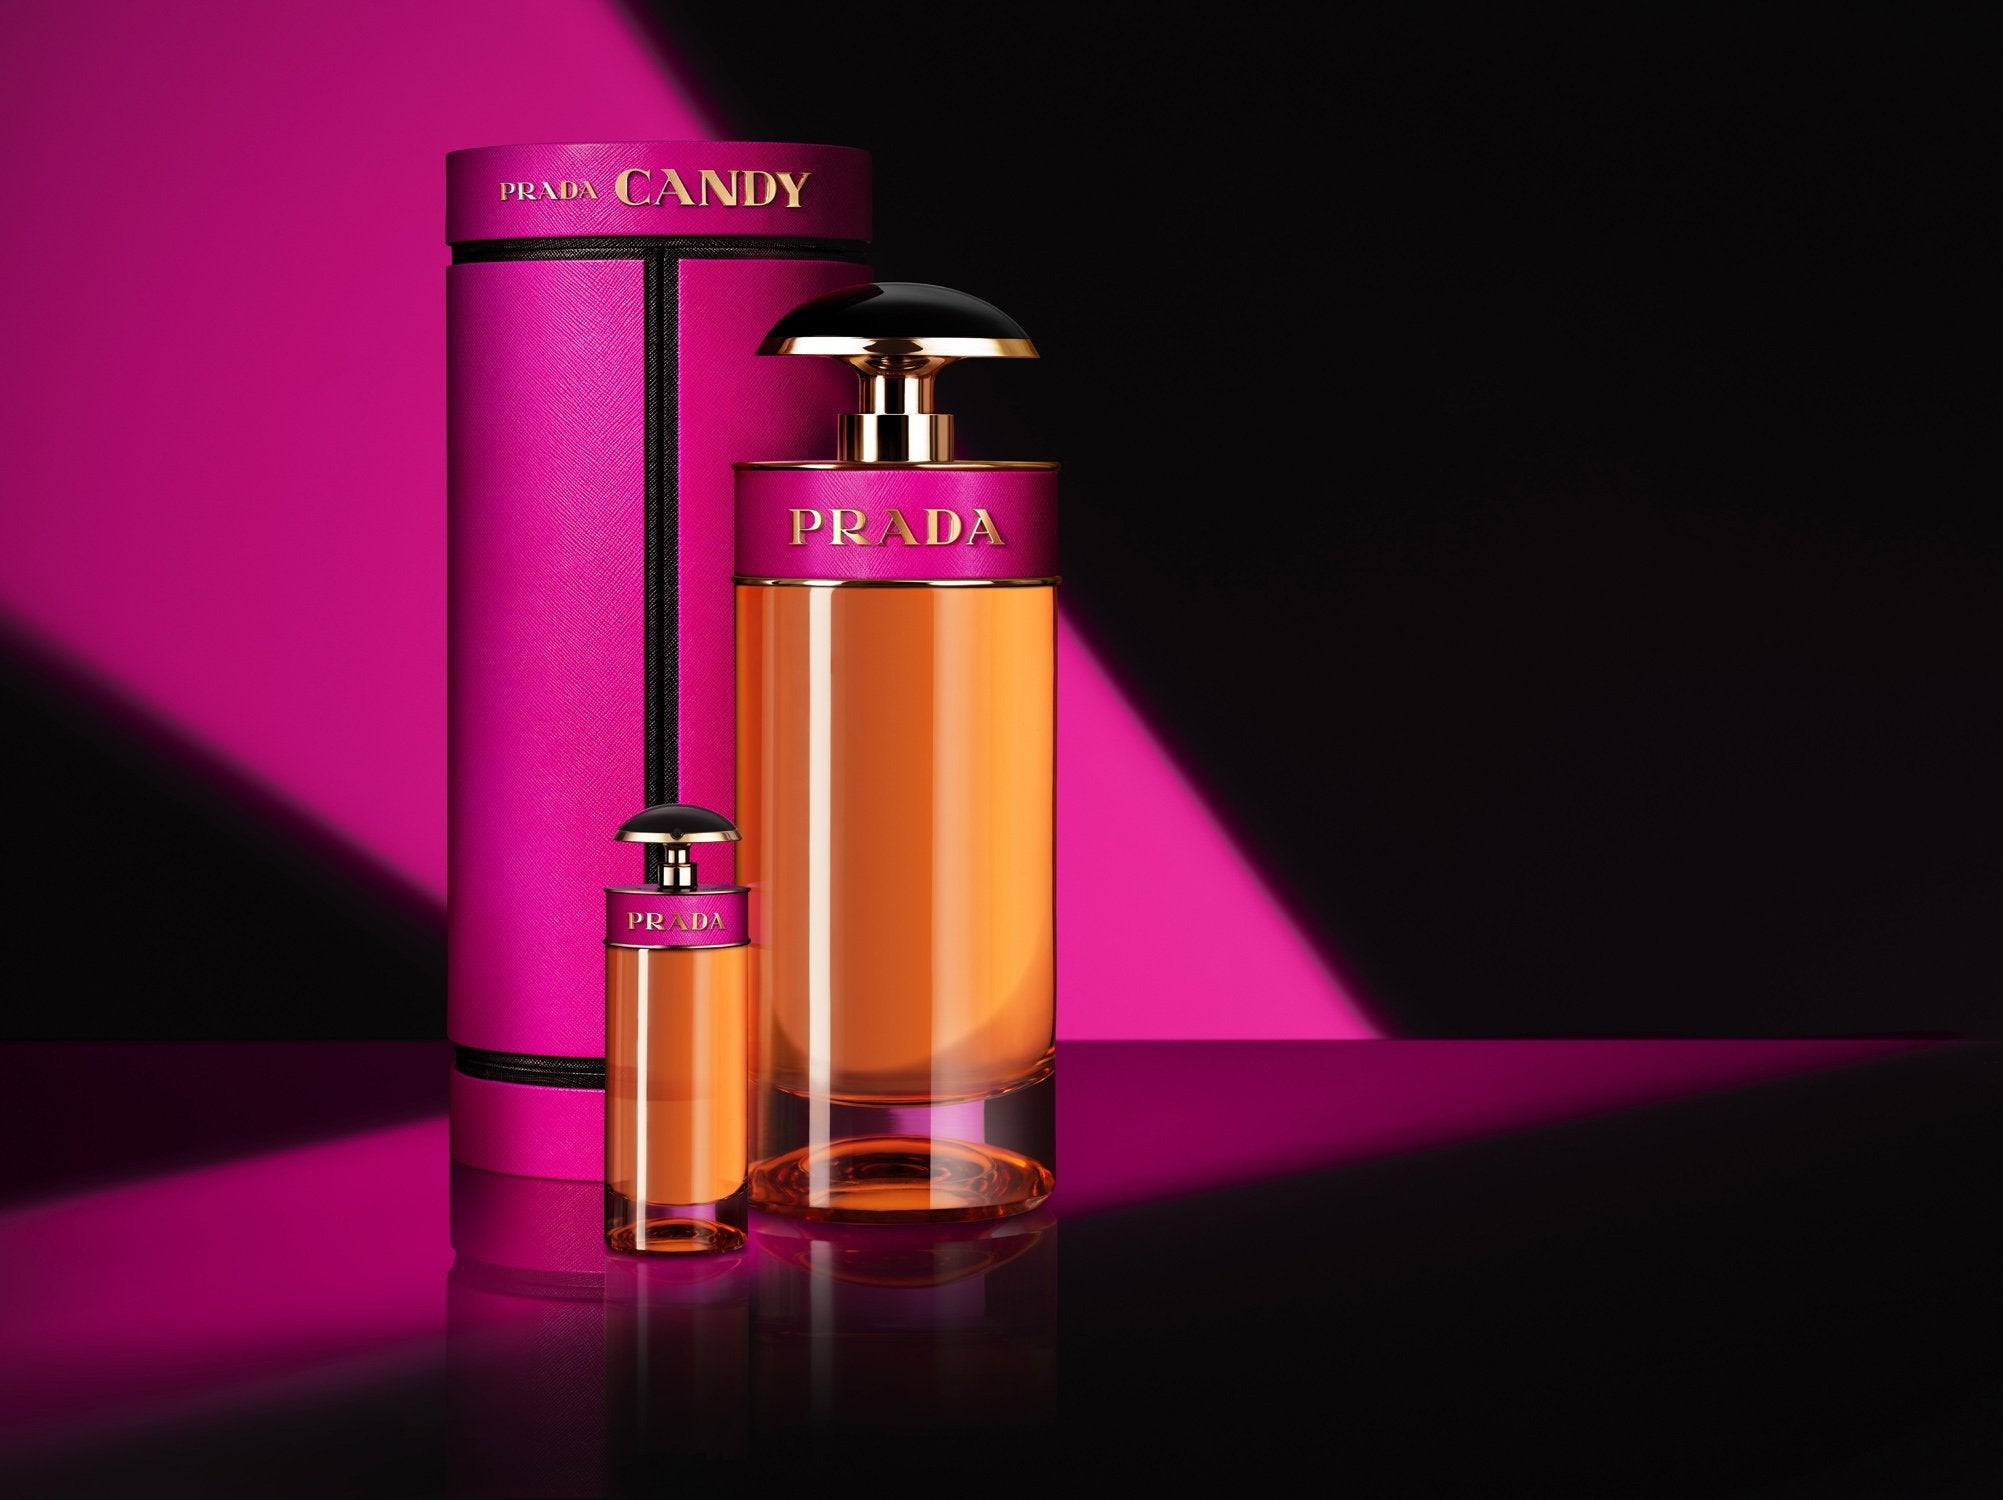 Prada Perfume & Cologne | My Perfume Shop Australia